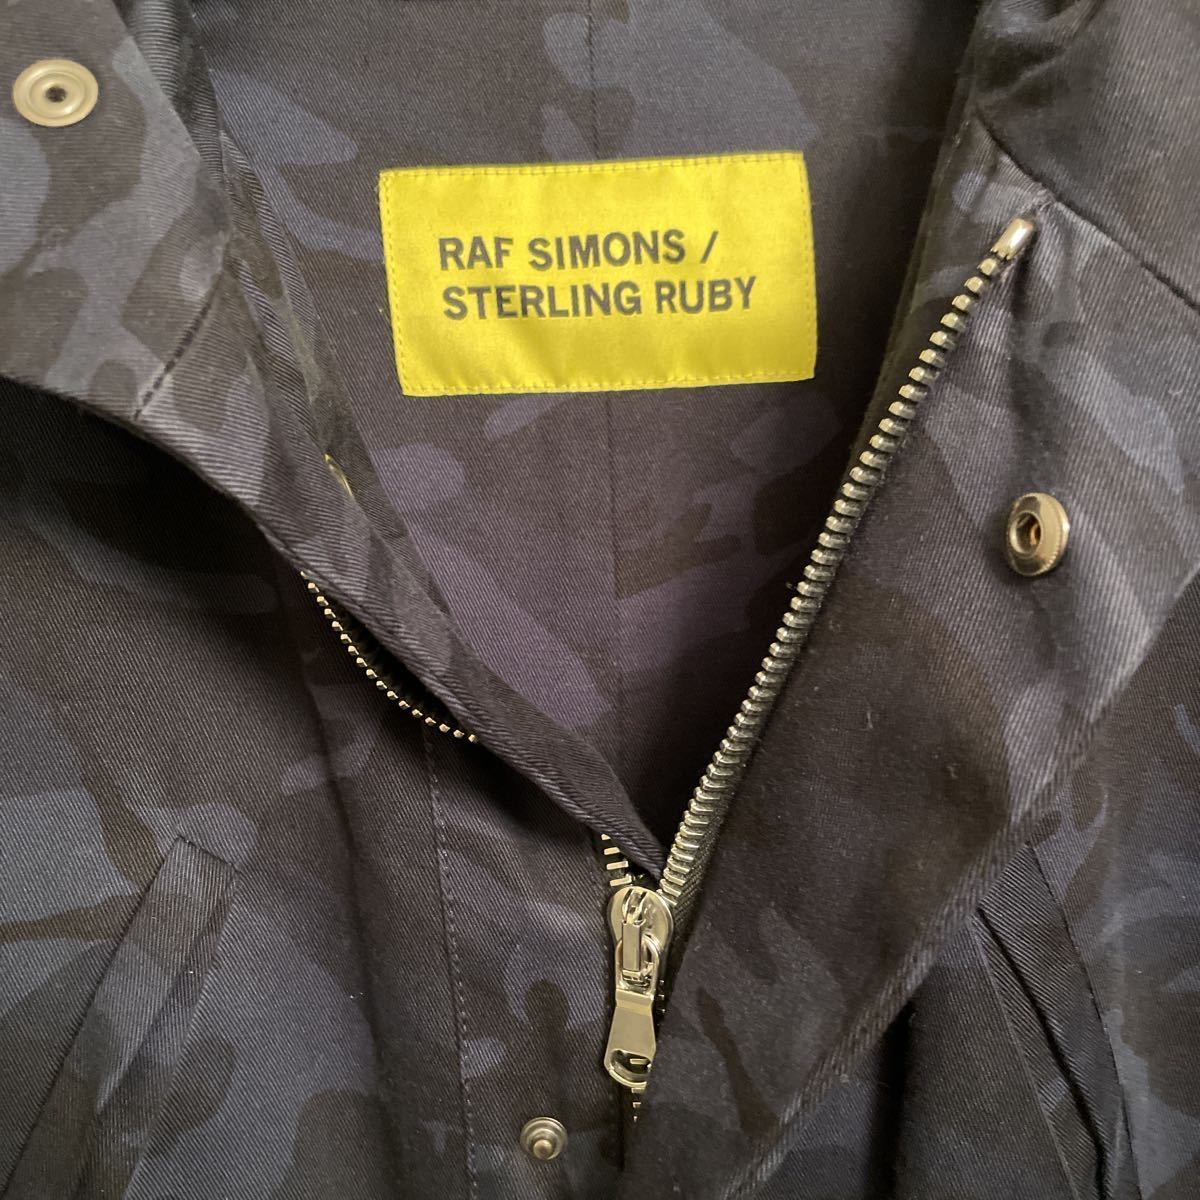 archive ラフシモンズ スターリングルビー RAF SIMONS STERLING RUBY 2014AW 迷彩モッズコート モッズパーカー  46 パッチワーク アーカイブ